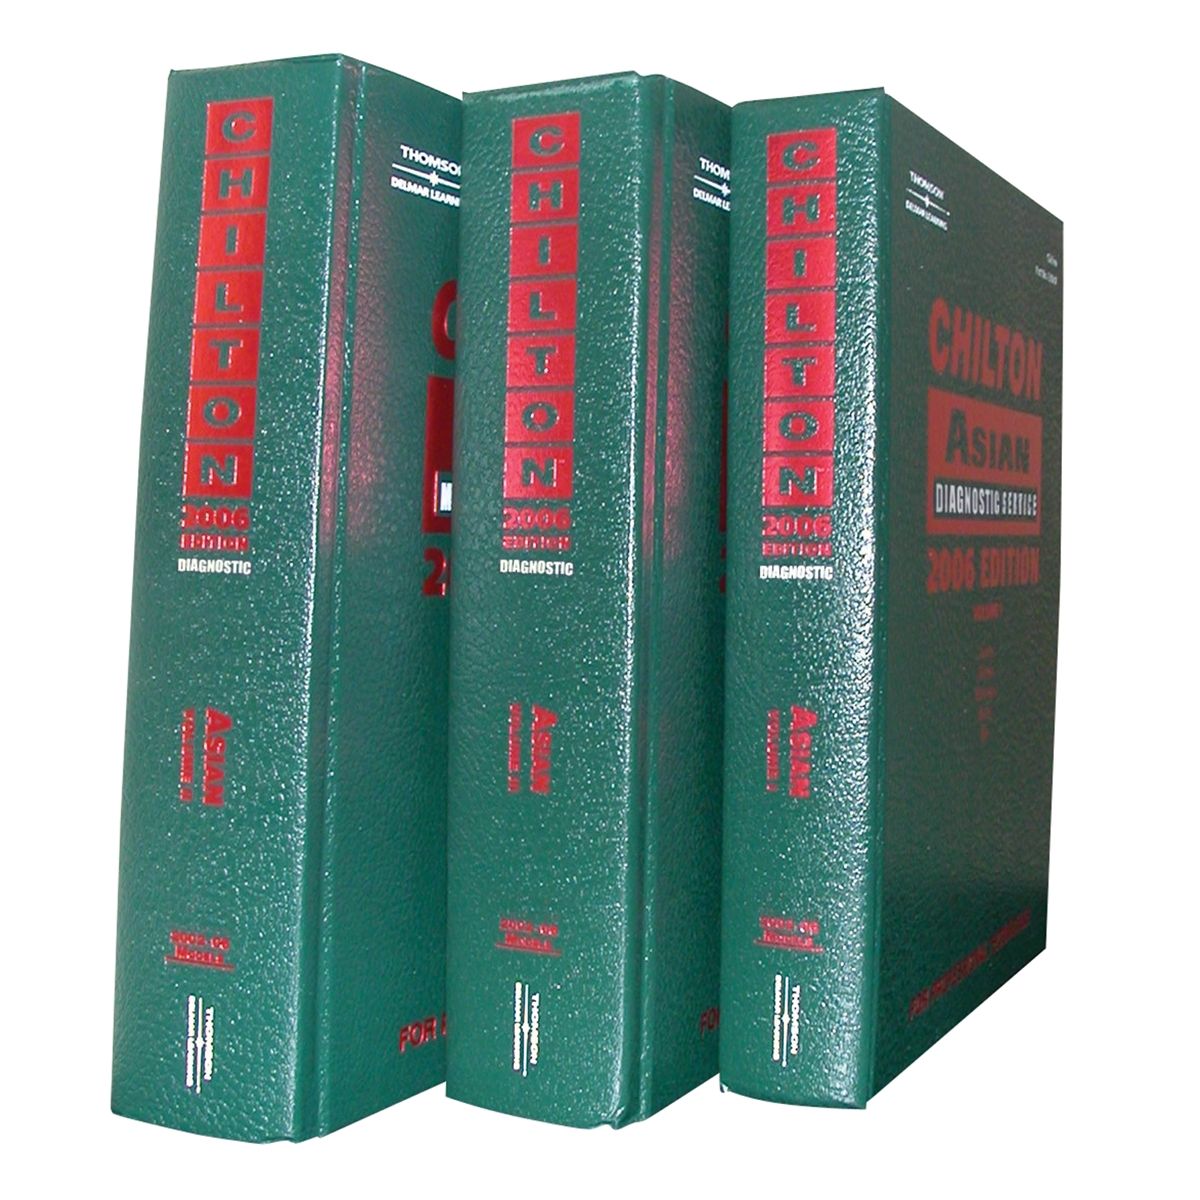 Asian Diagnostics, 2006 Edition: 3 Volume Set